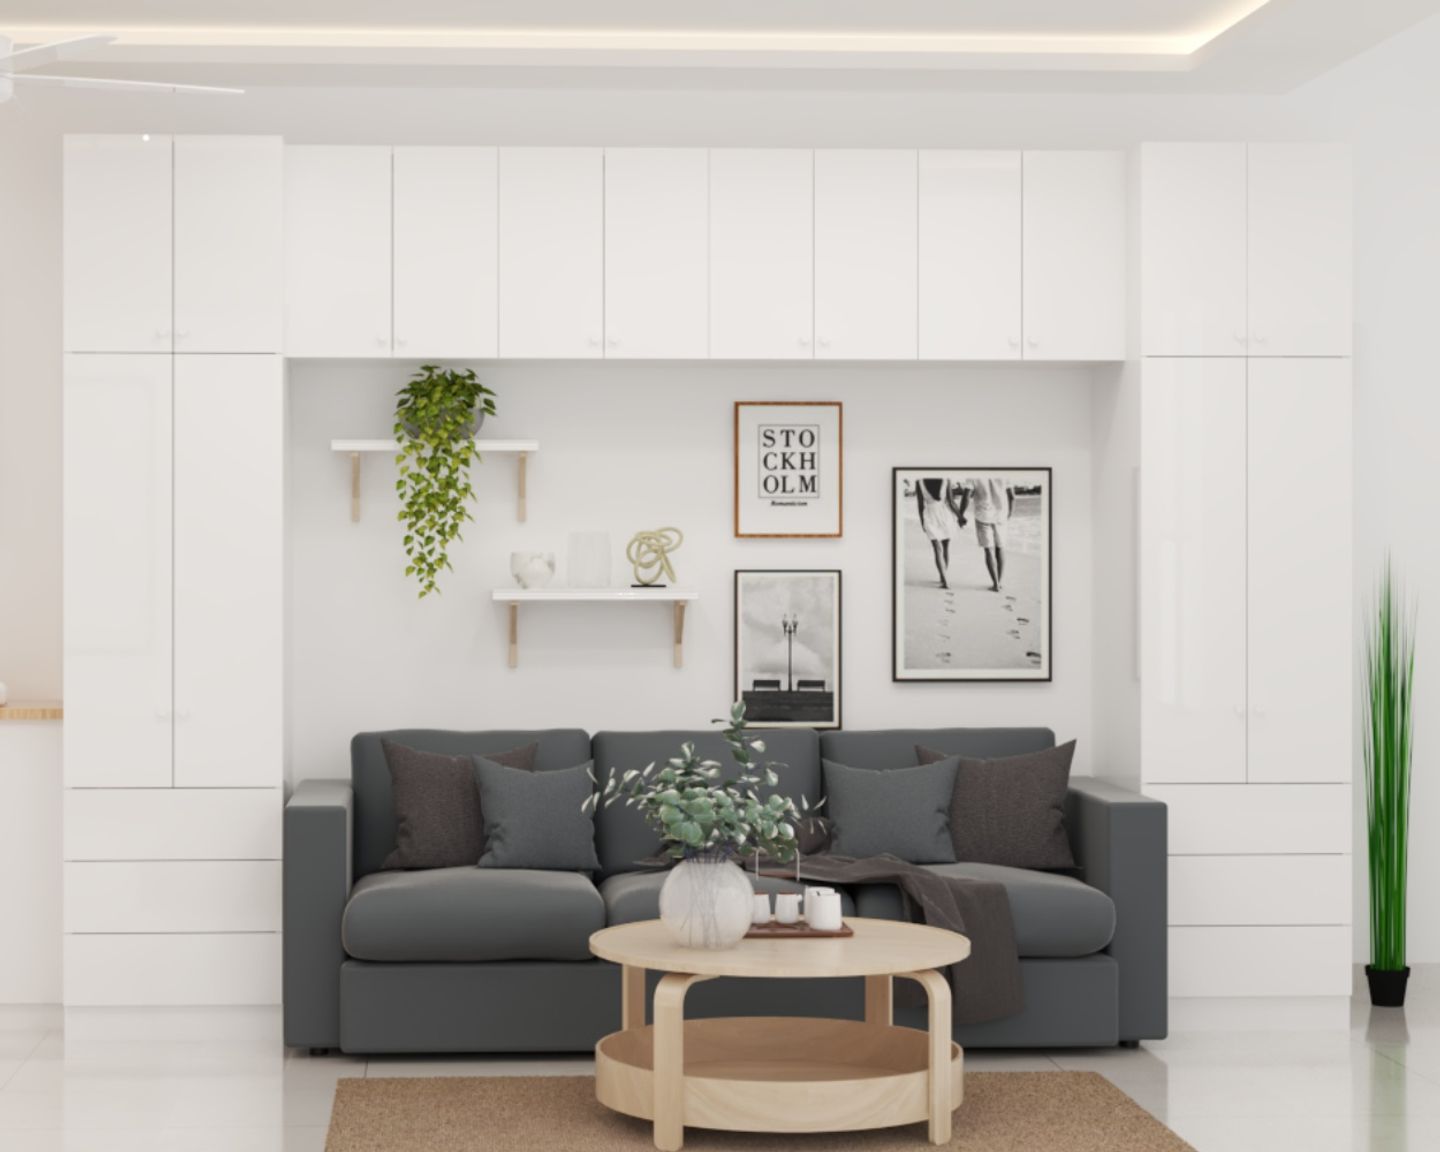 Minimal Living Room Design With A Wardrobe - Livspace